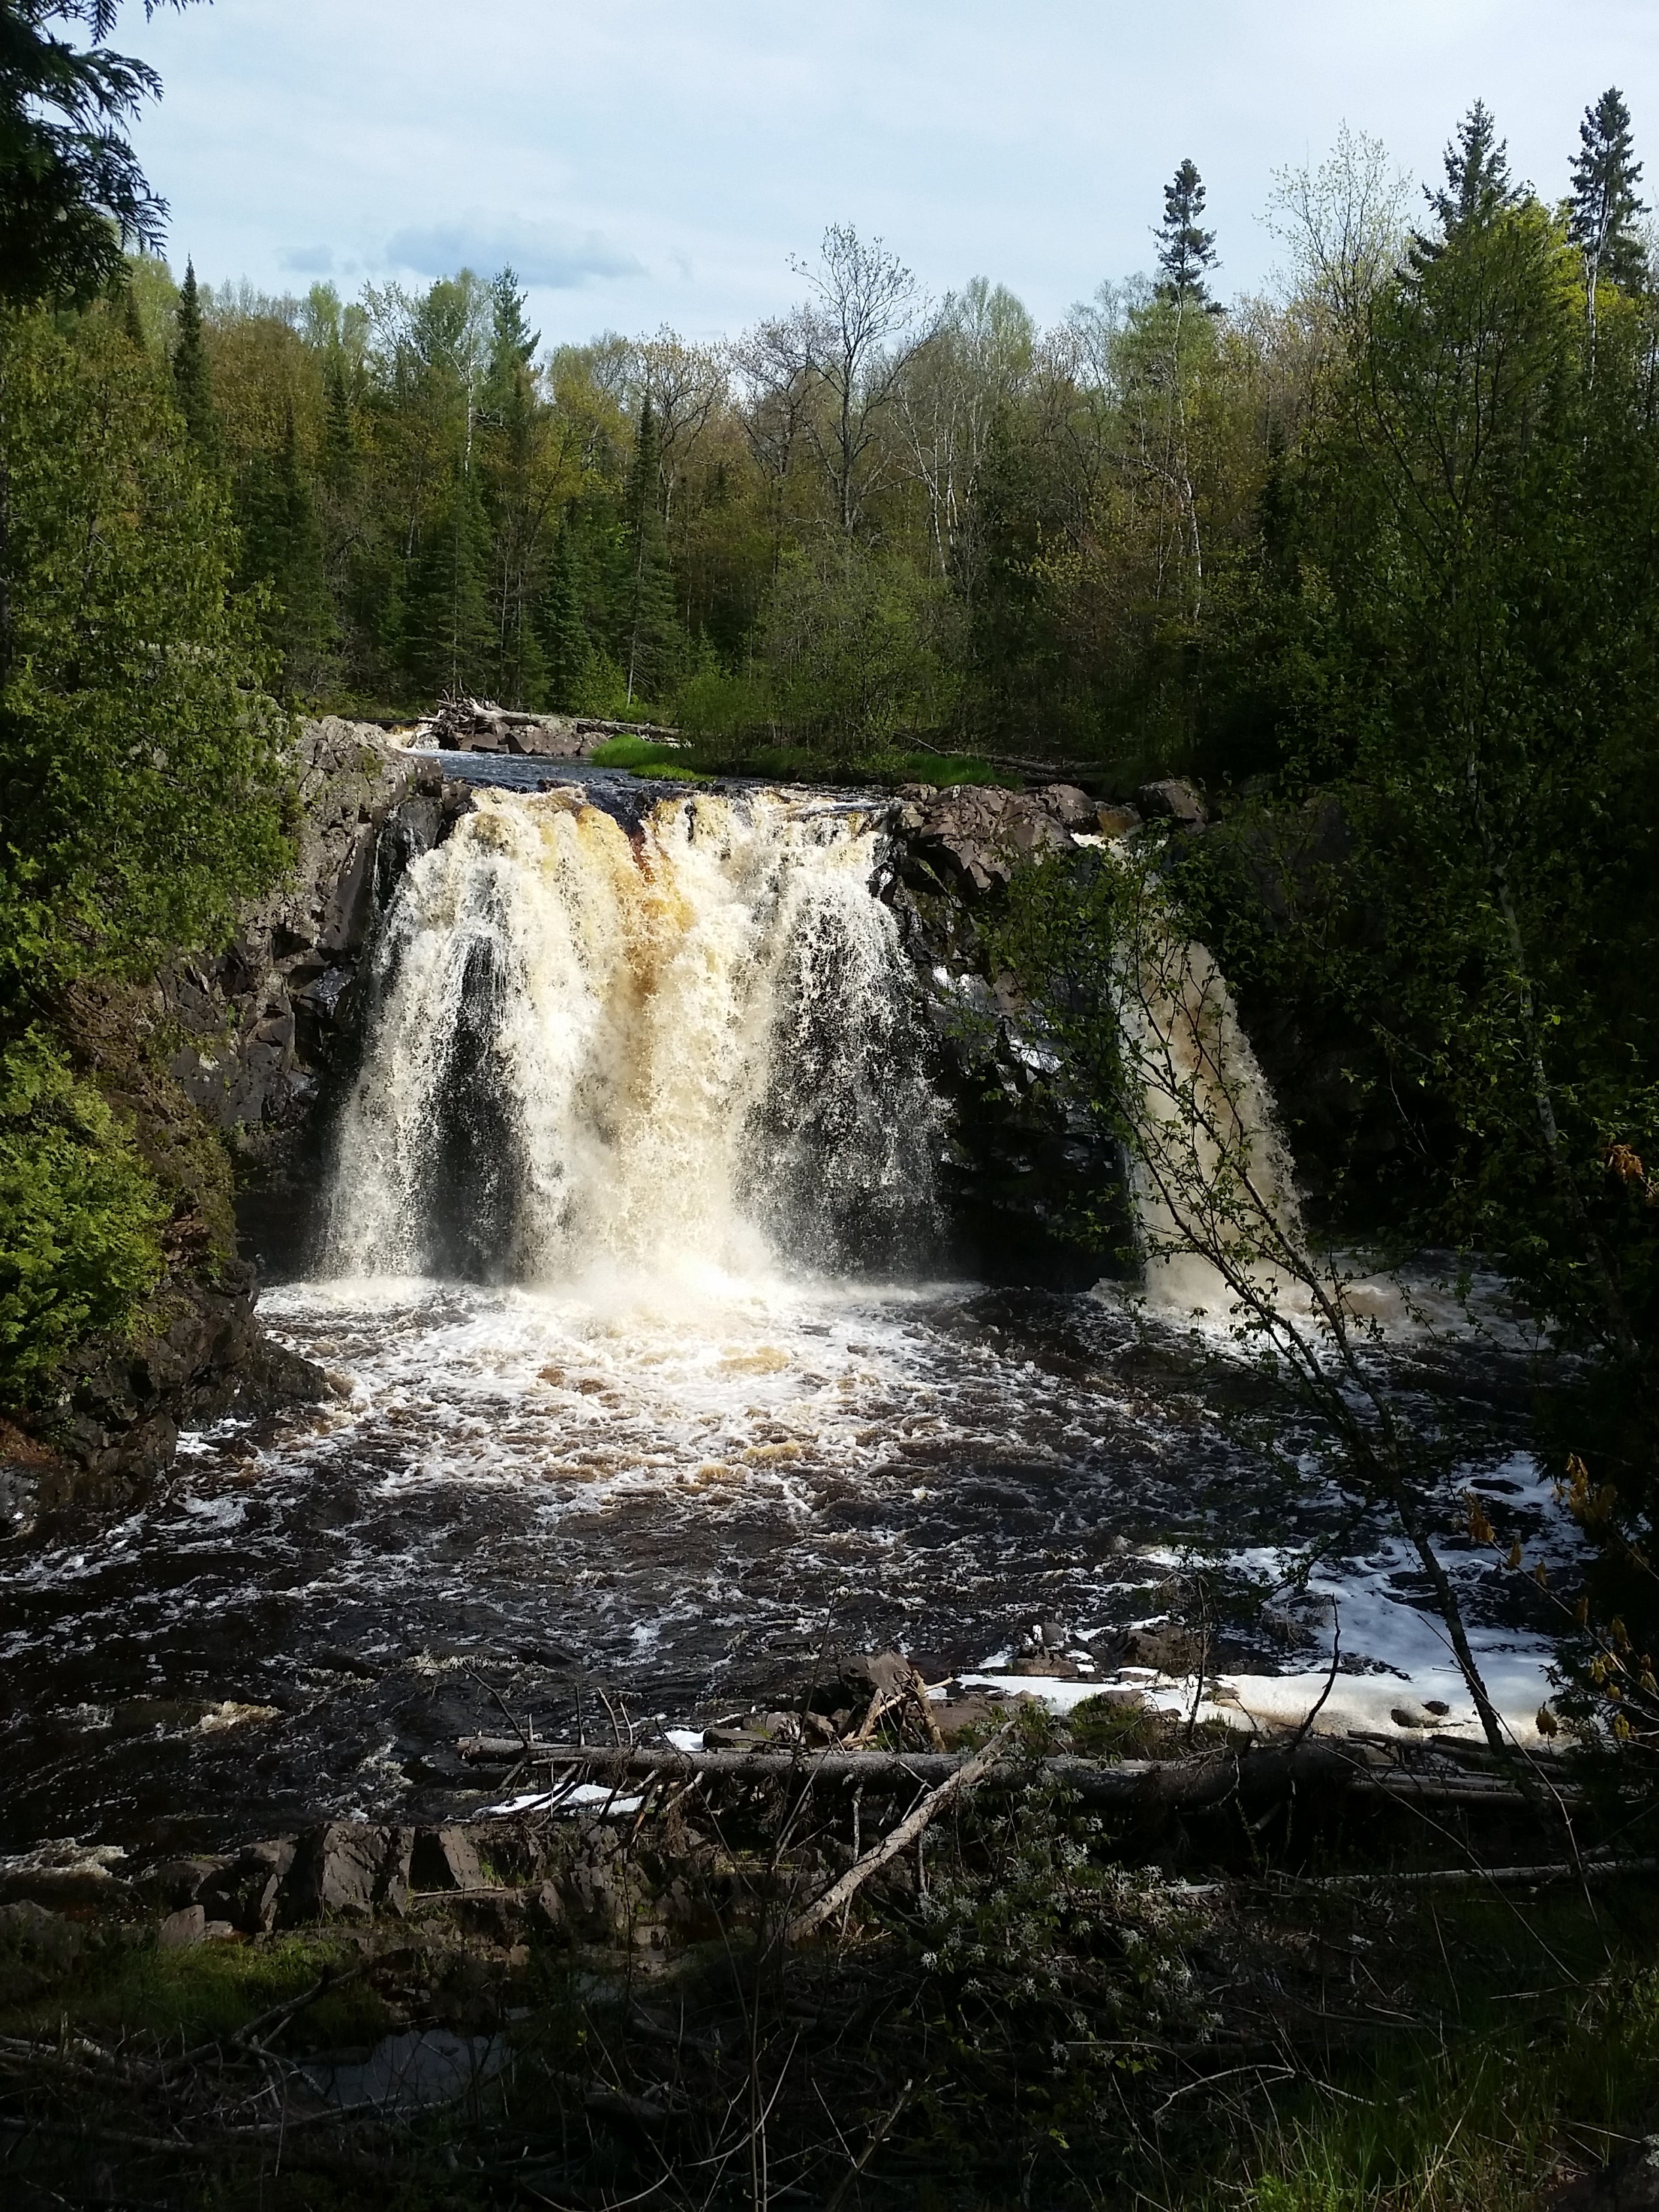 Little Manitou Falls 31 feet high